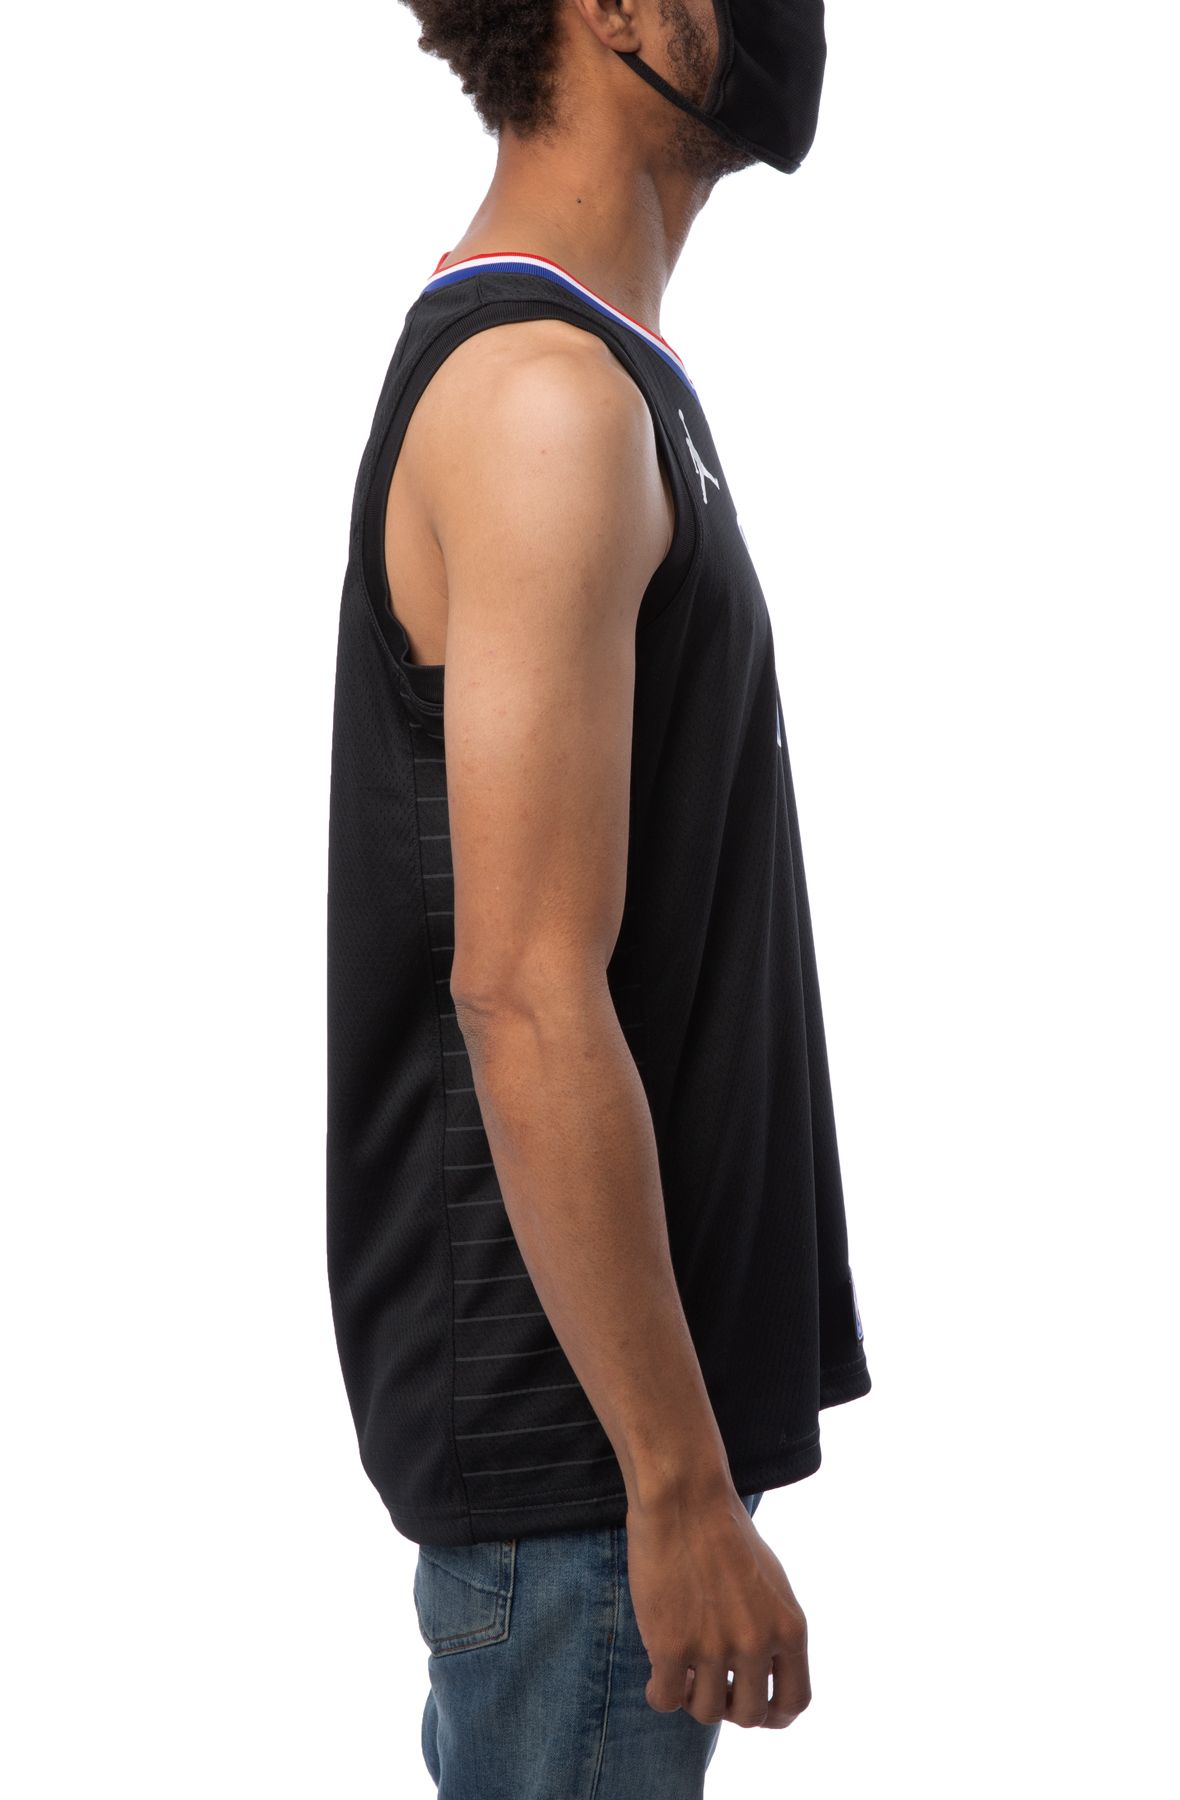 Men's Los Angeles Clippers Statement Edition Jordan Dri-Fit NBA Swingman Jersey in Black, Size: Small | DO9529-011